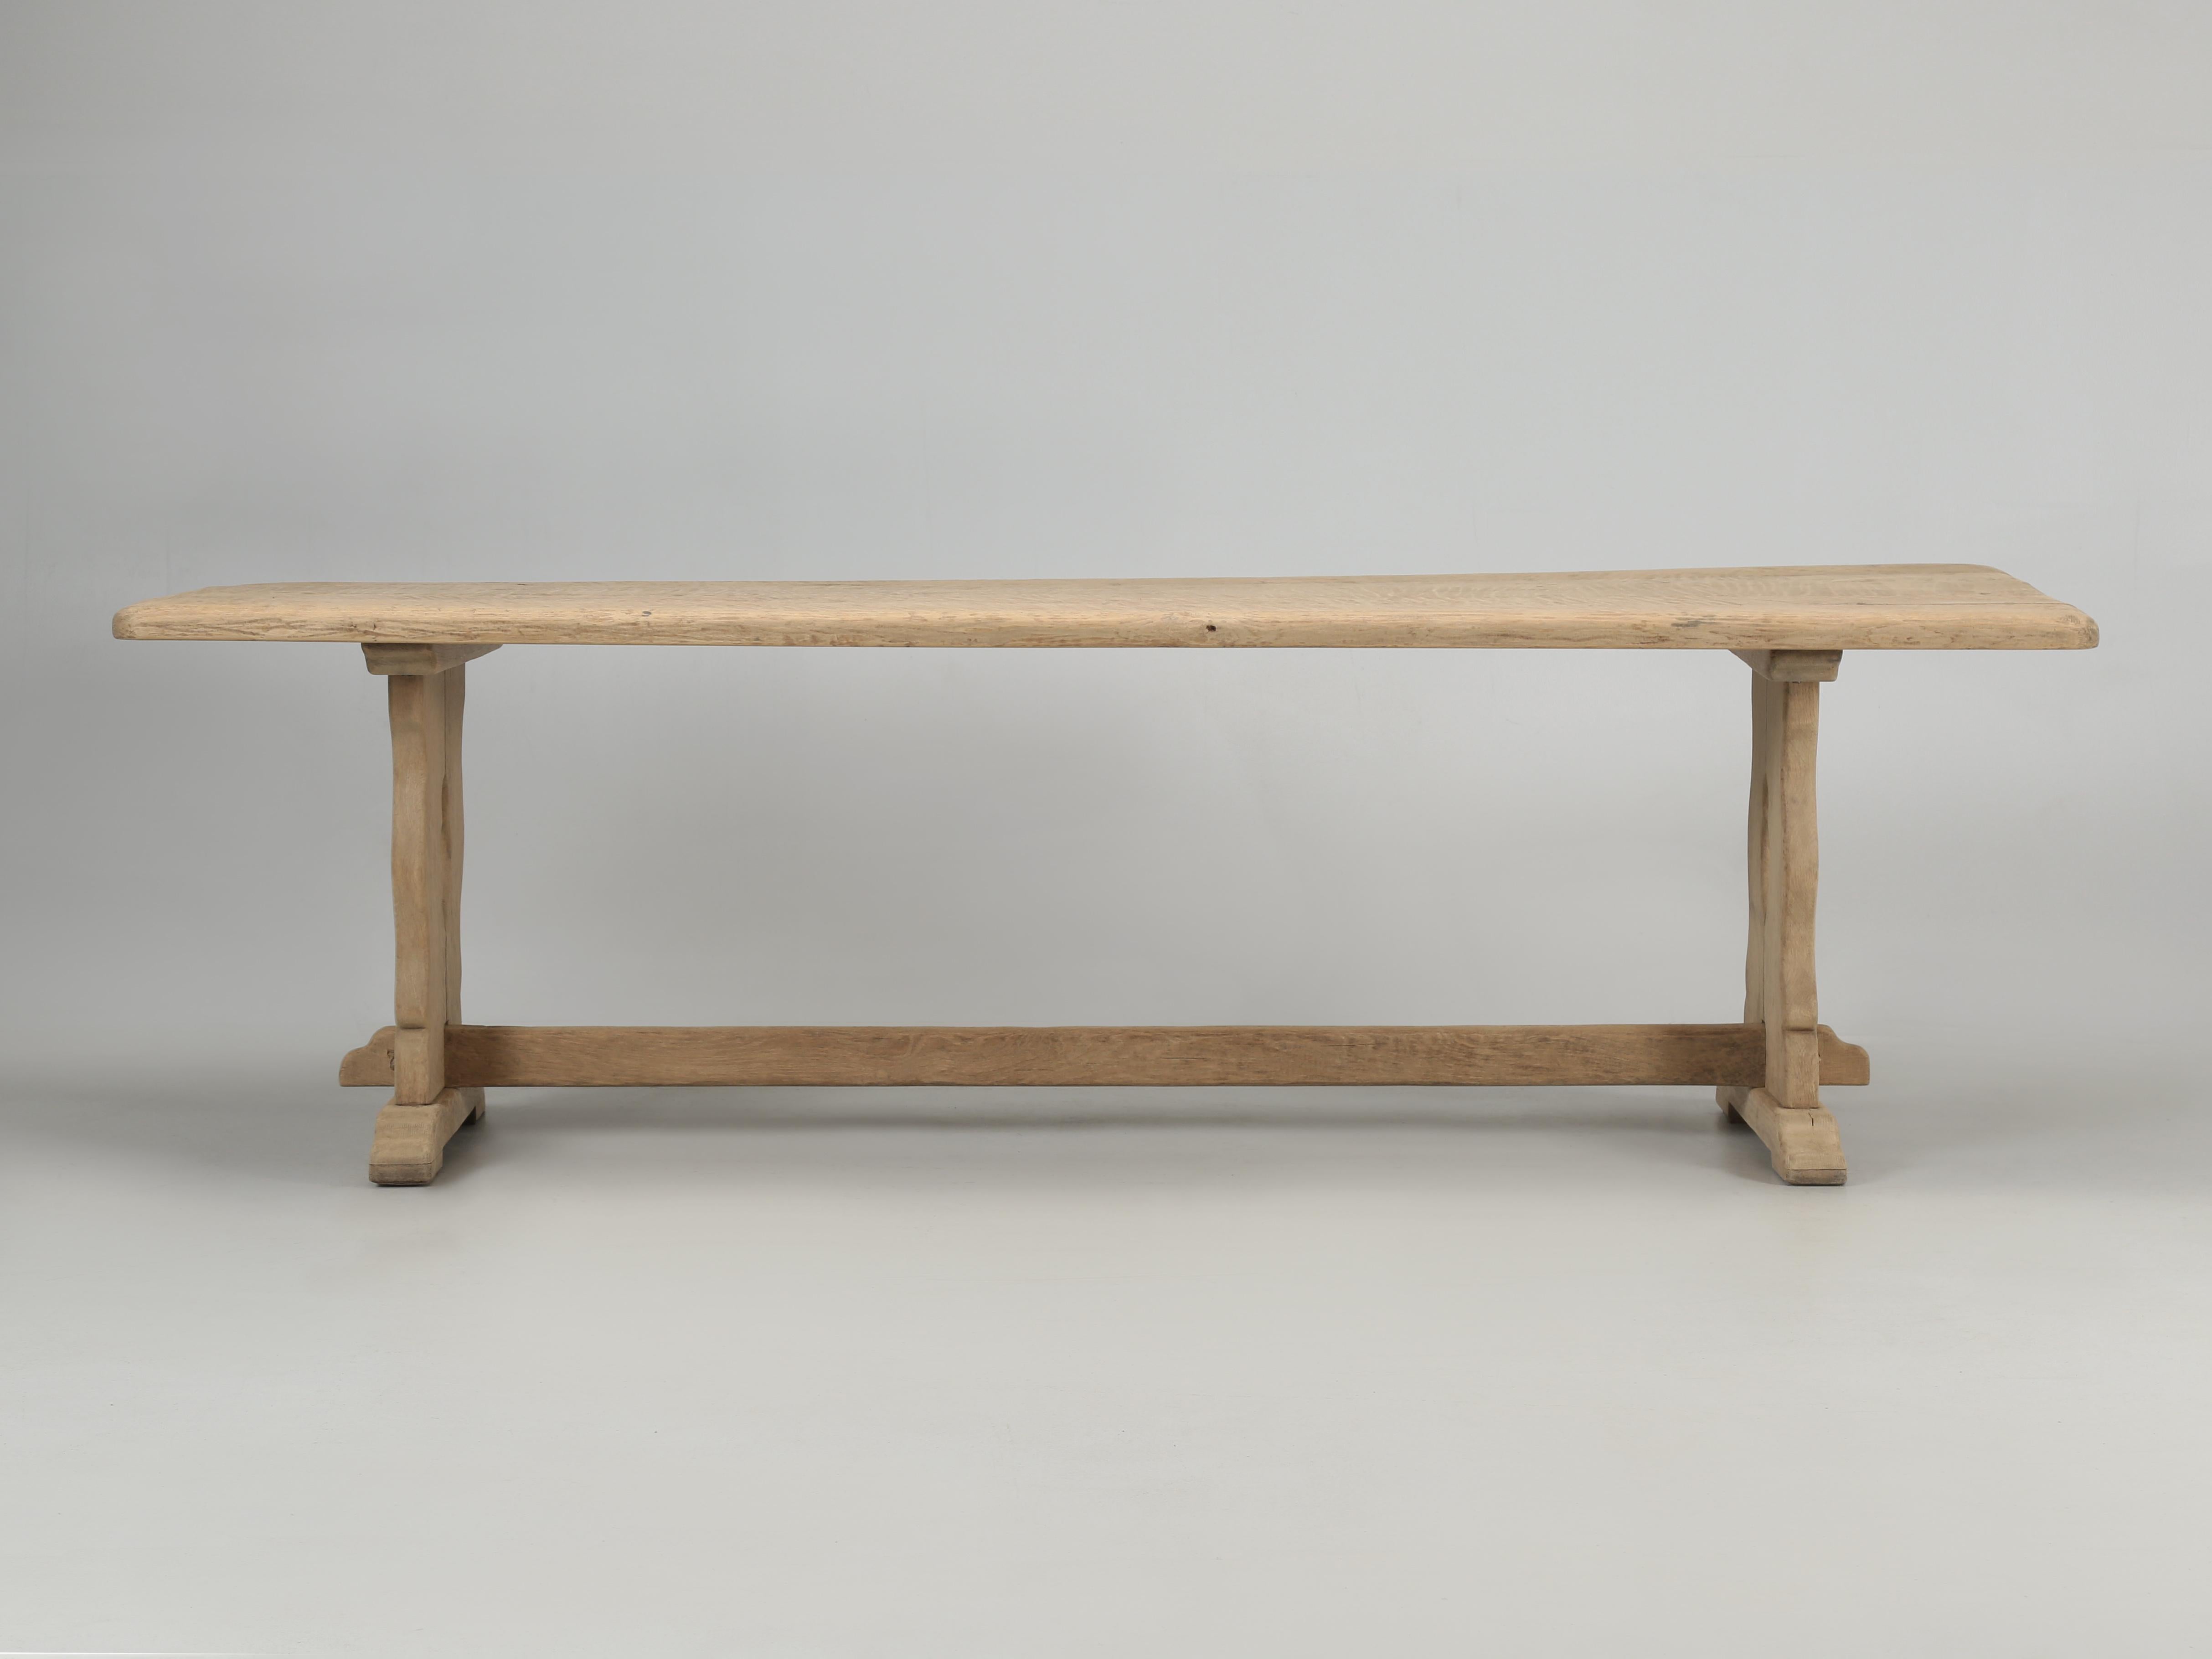 Wood French Oak Trestle Farm Table with Unusual Cross-Hatch Scrub Textured Finish 